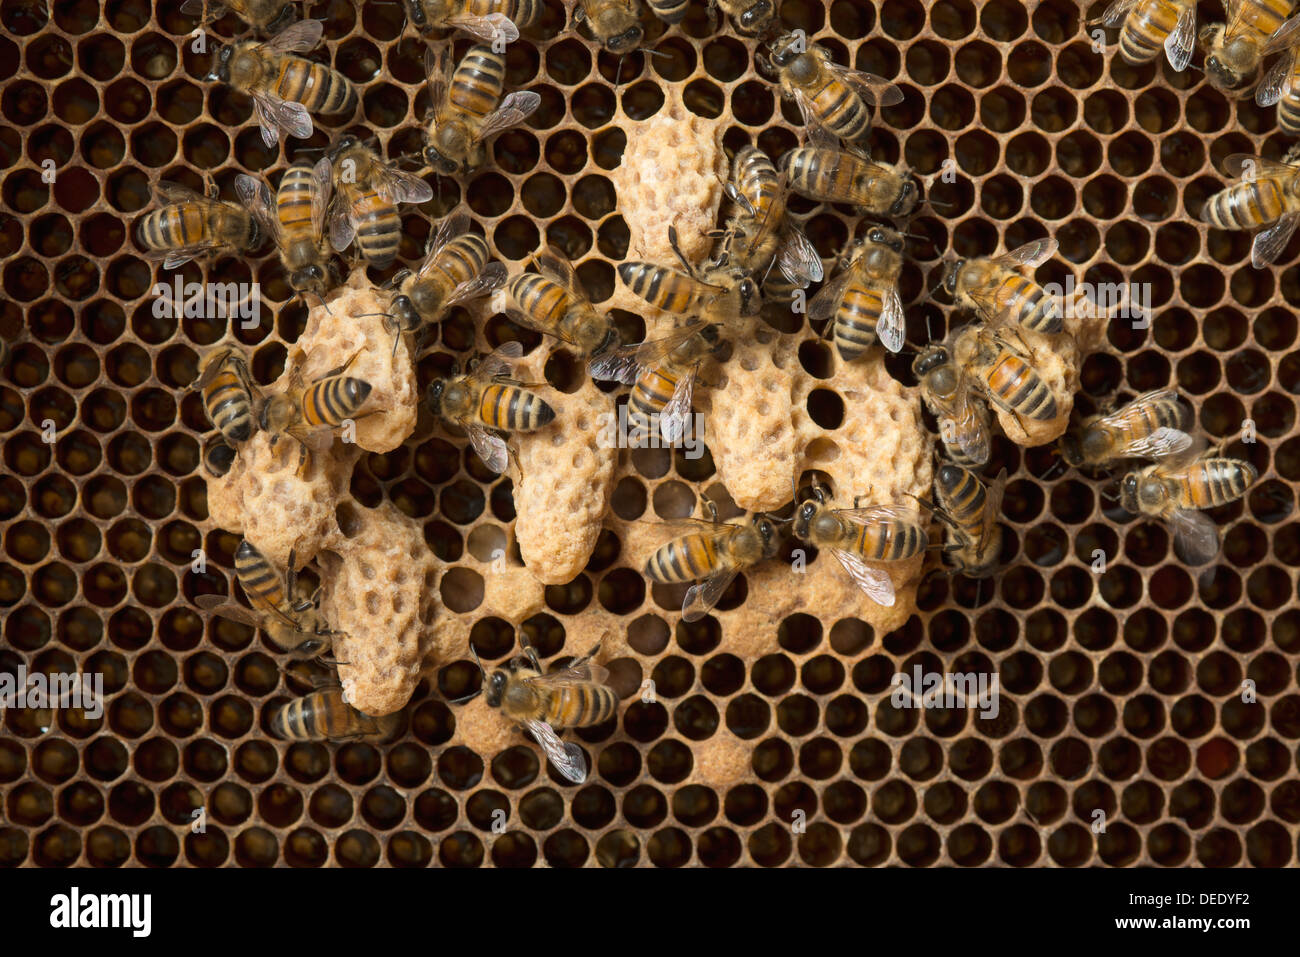 Honey bee queen cells on a honey comb Stock Photo